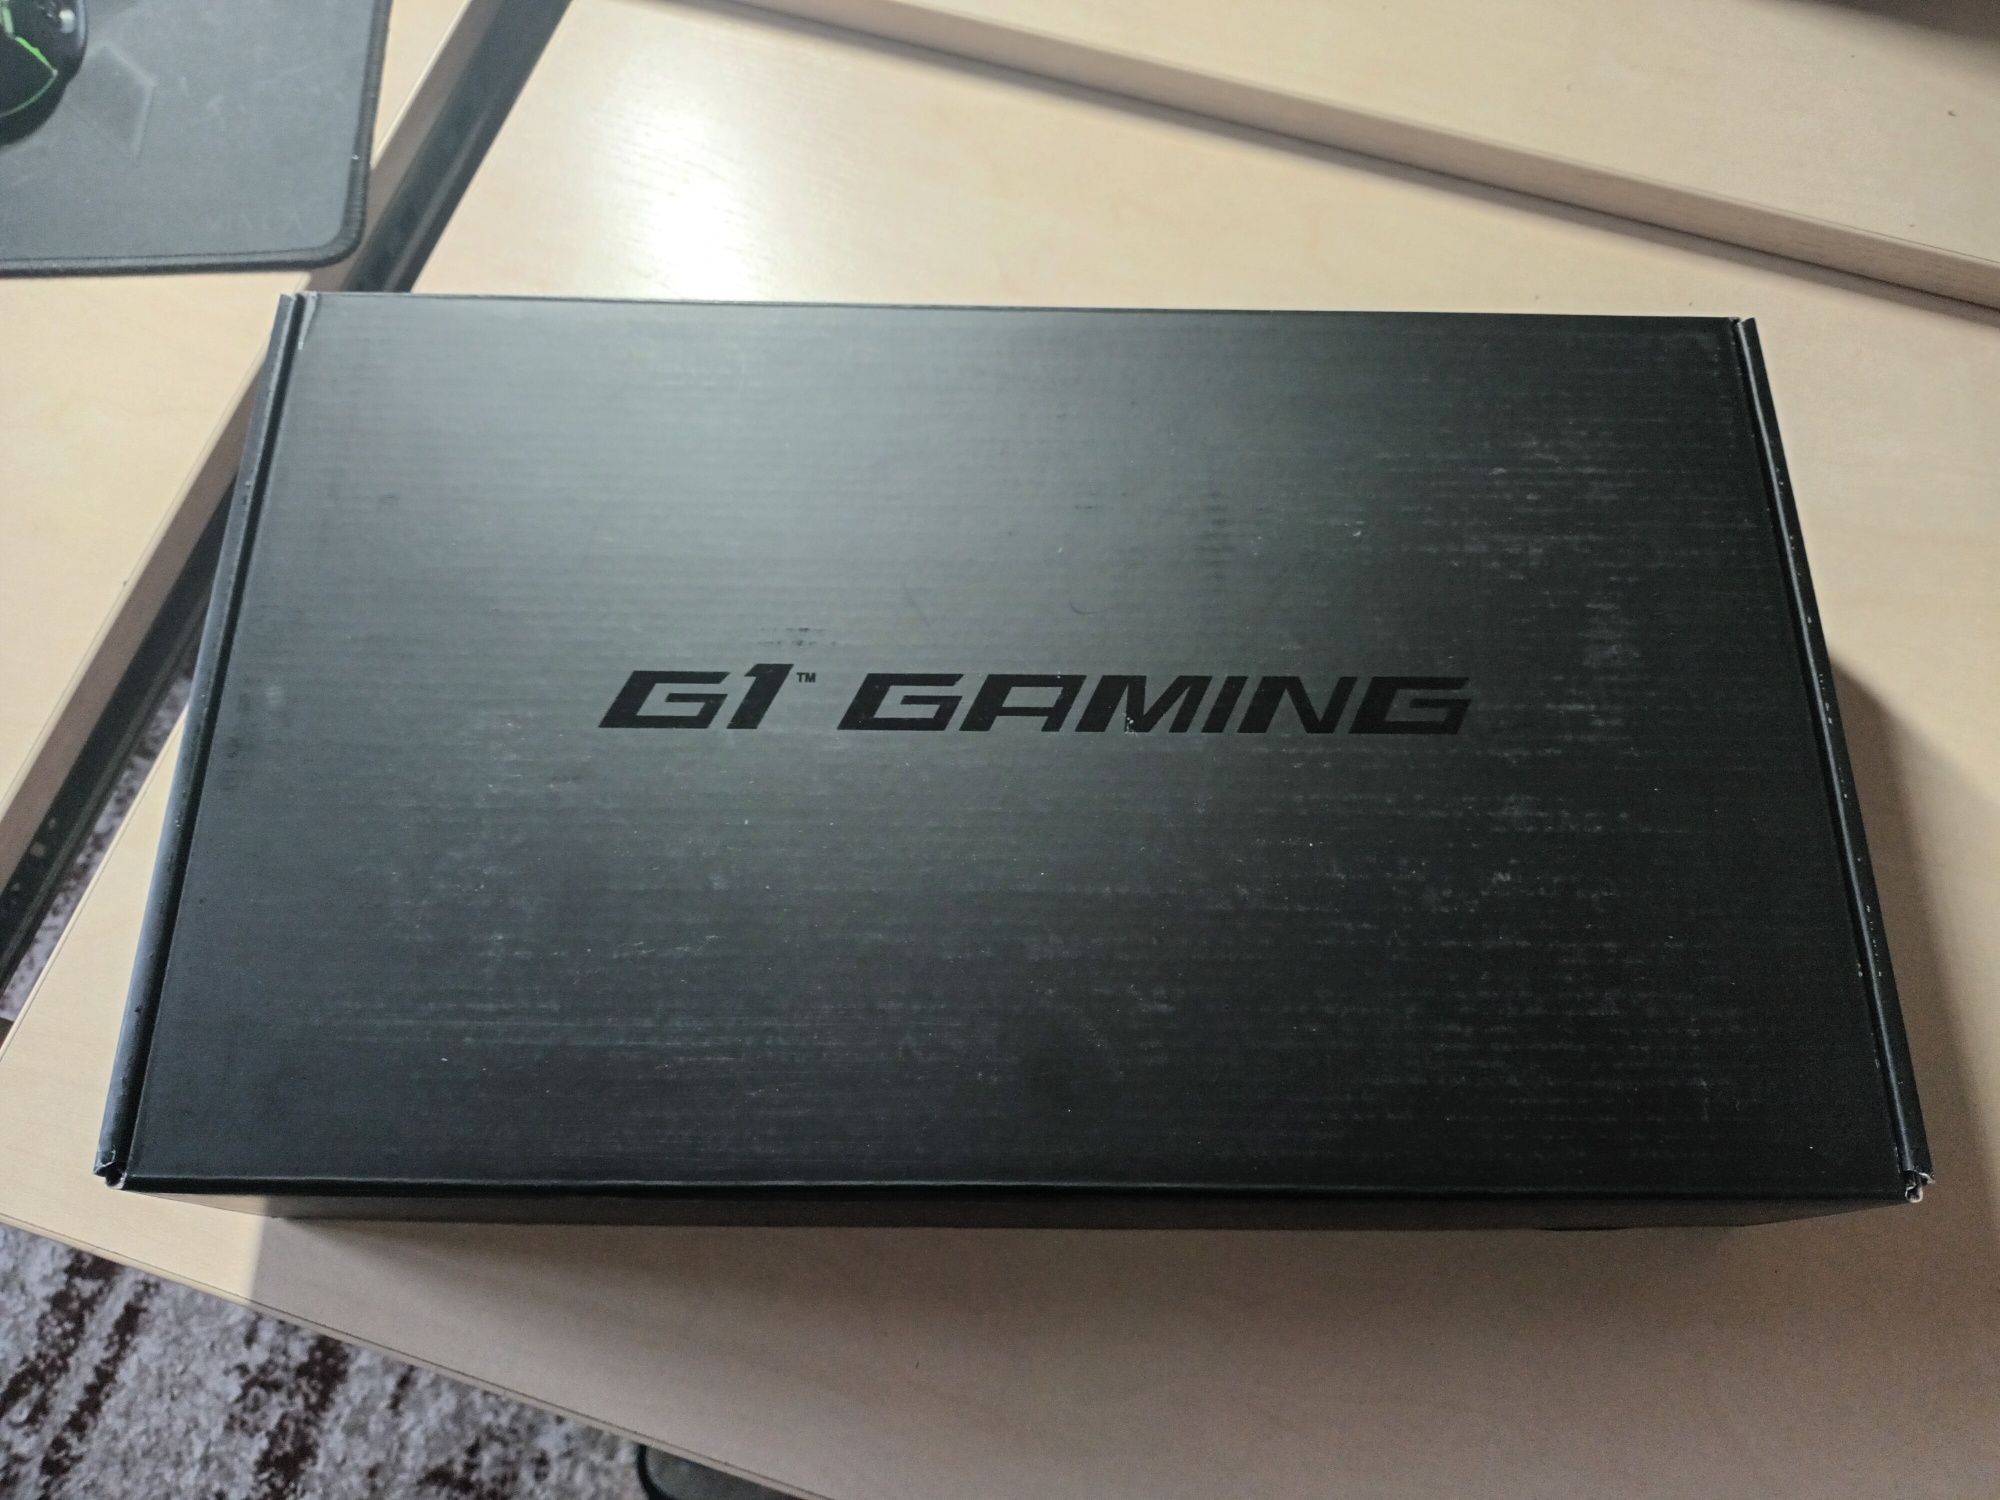 Gigabyte gtx 1070 8gb g1 gaming коробка